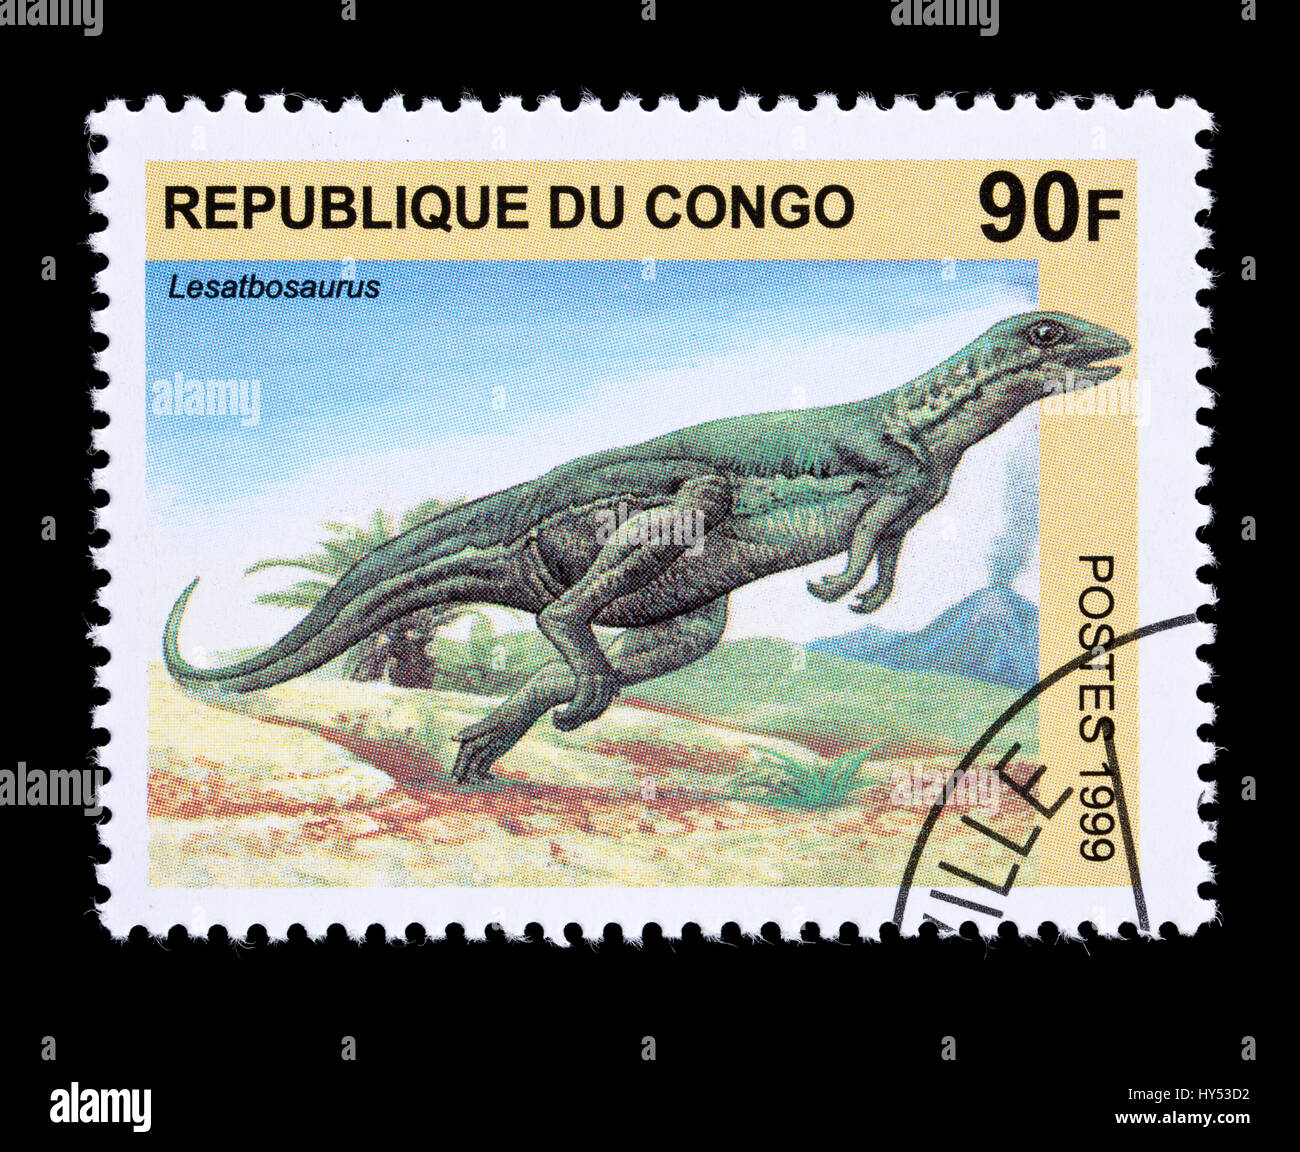 Francobollo dal Congo raffigurante un dinosauro Lesothosaurus Foto Stock